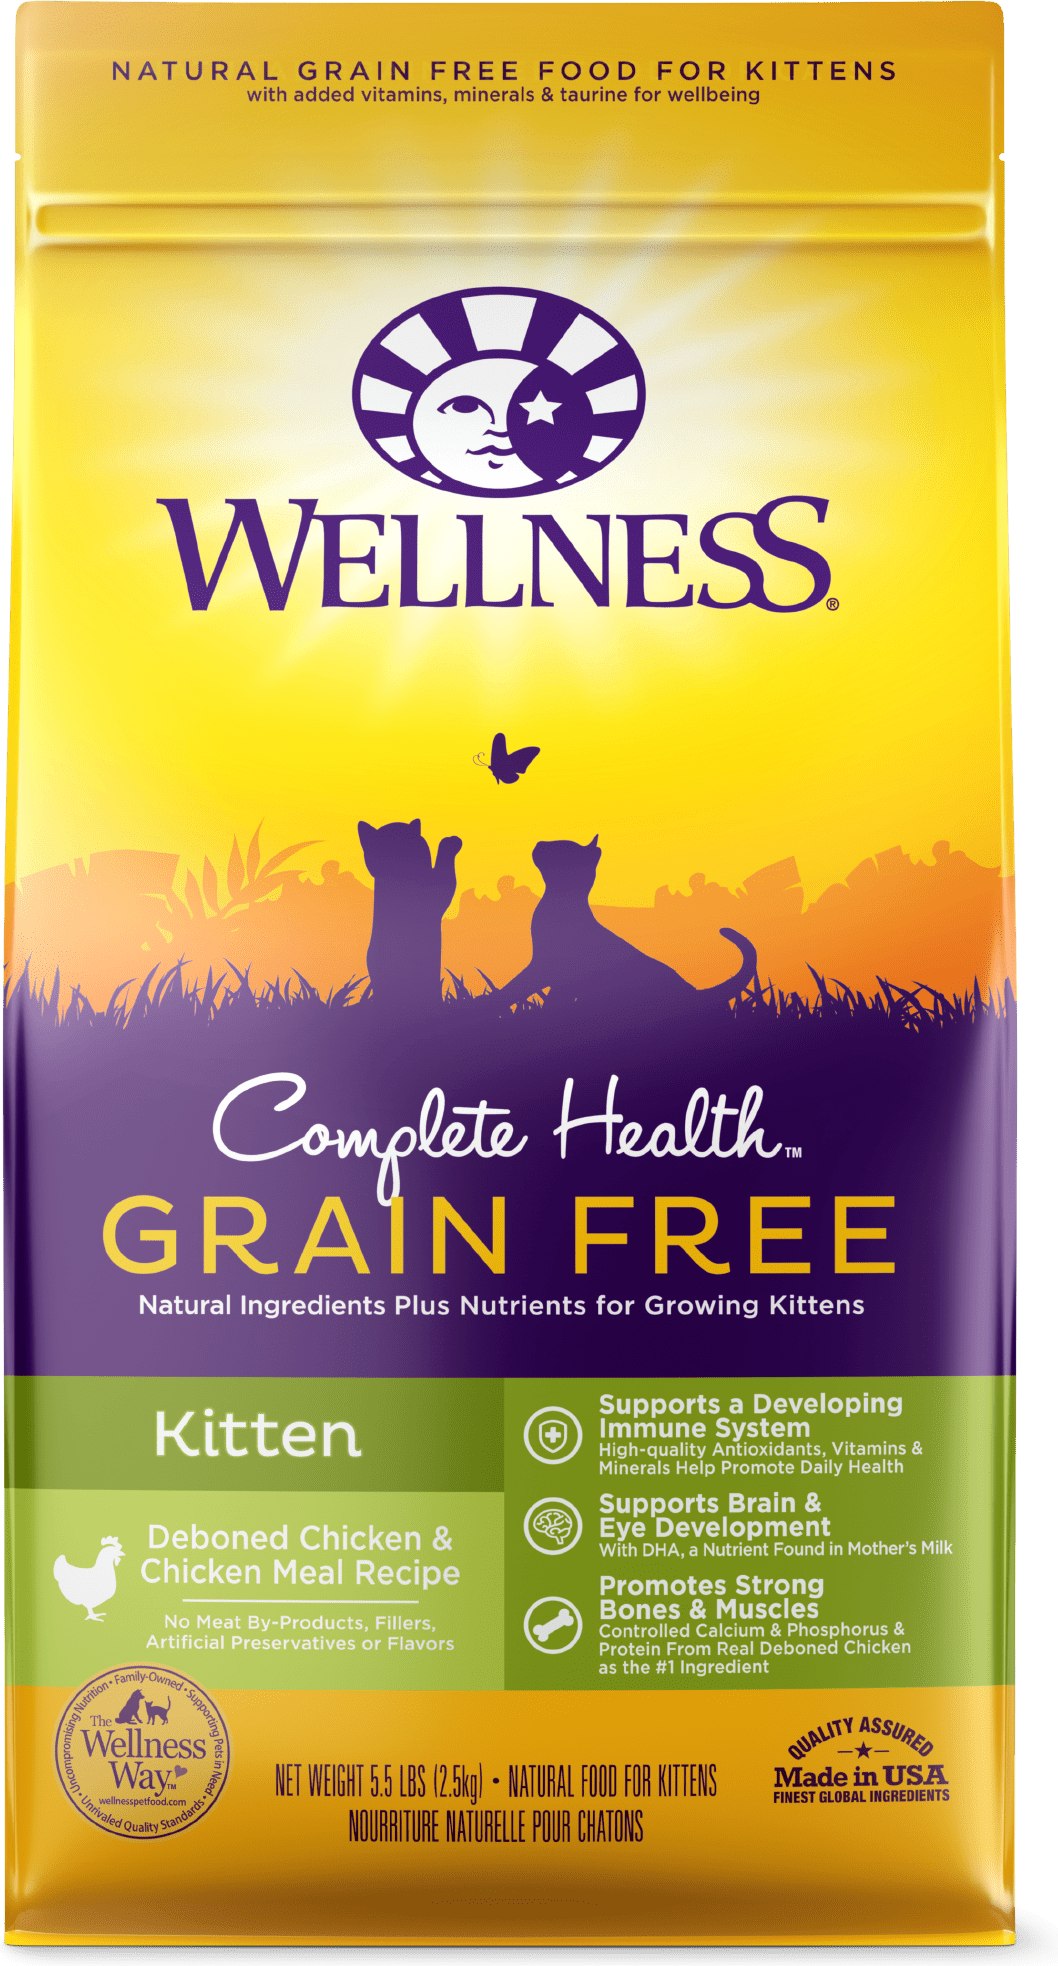 Wellness Complete Health Grain Free Kitten Kitten: Deboned Chicken & Chicken Meal